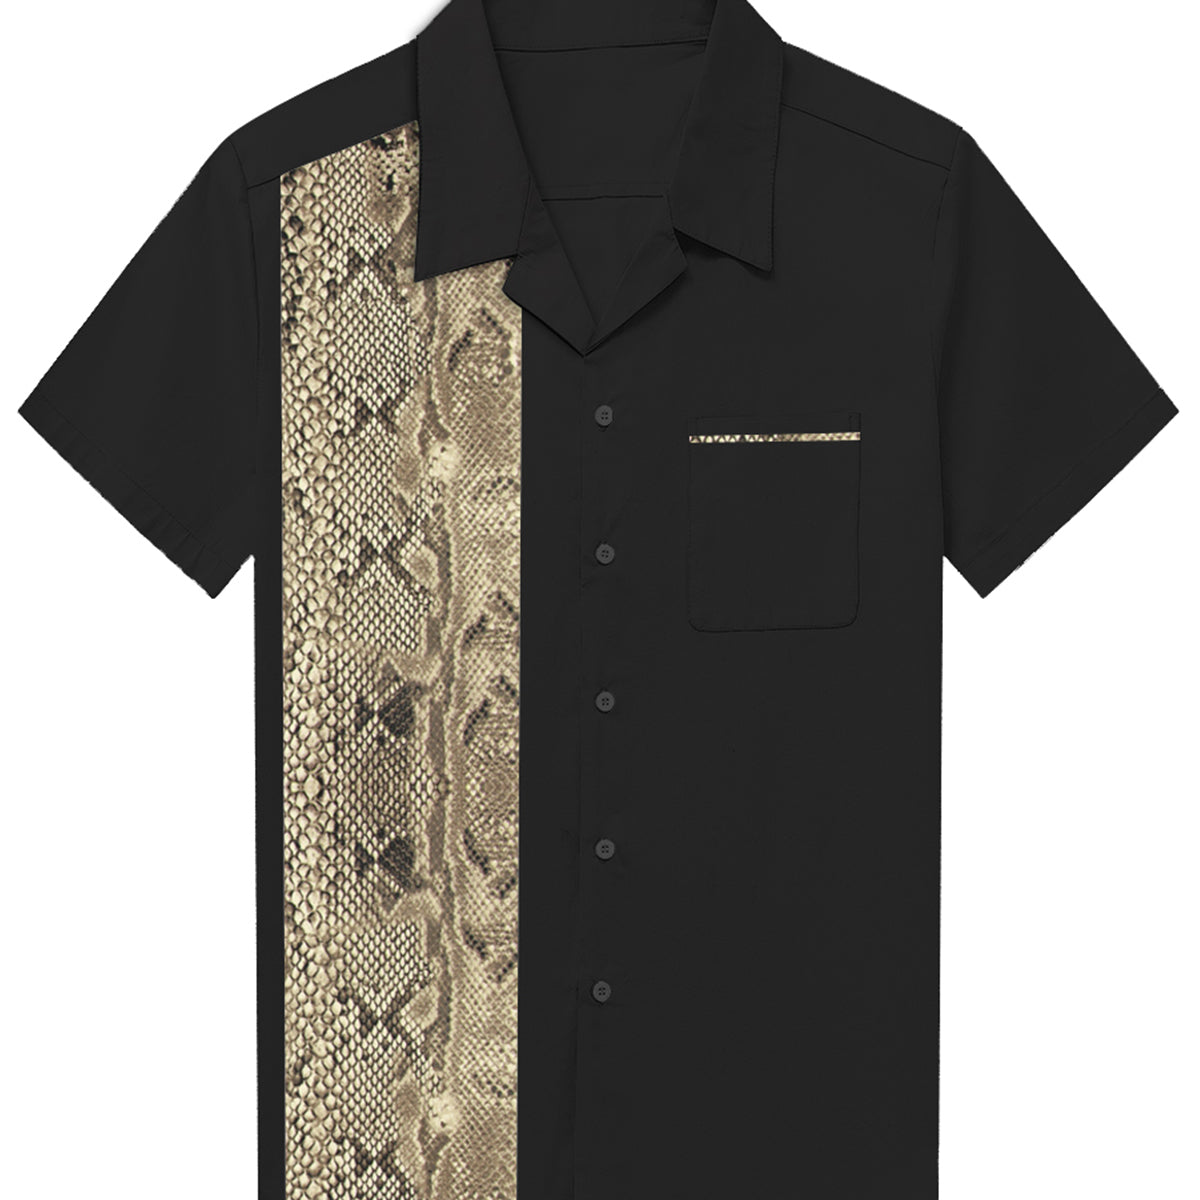 Men's Vintage 50's Cotton Bowling Snake Print Short Sleeve Shirt